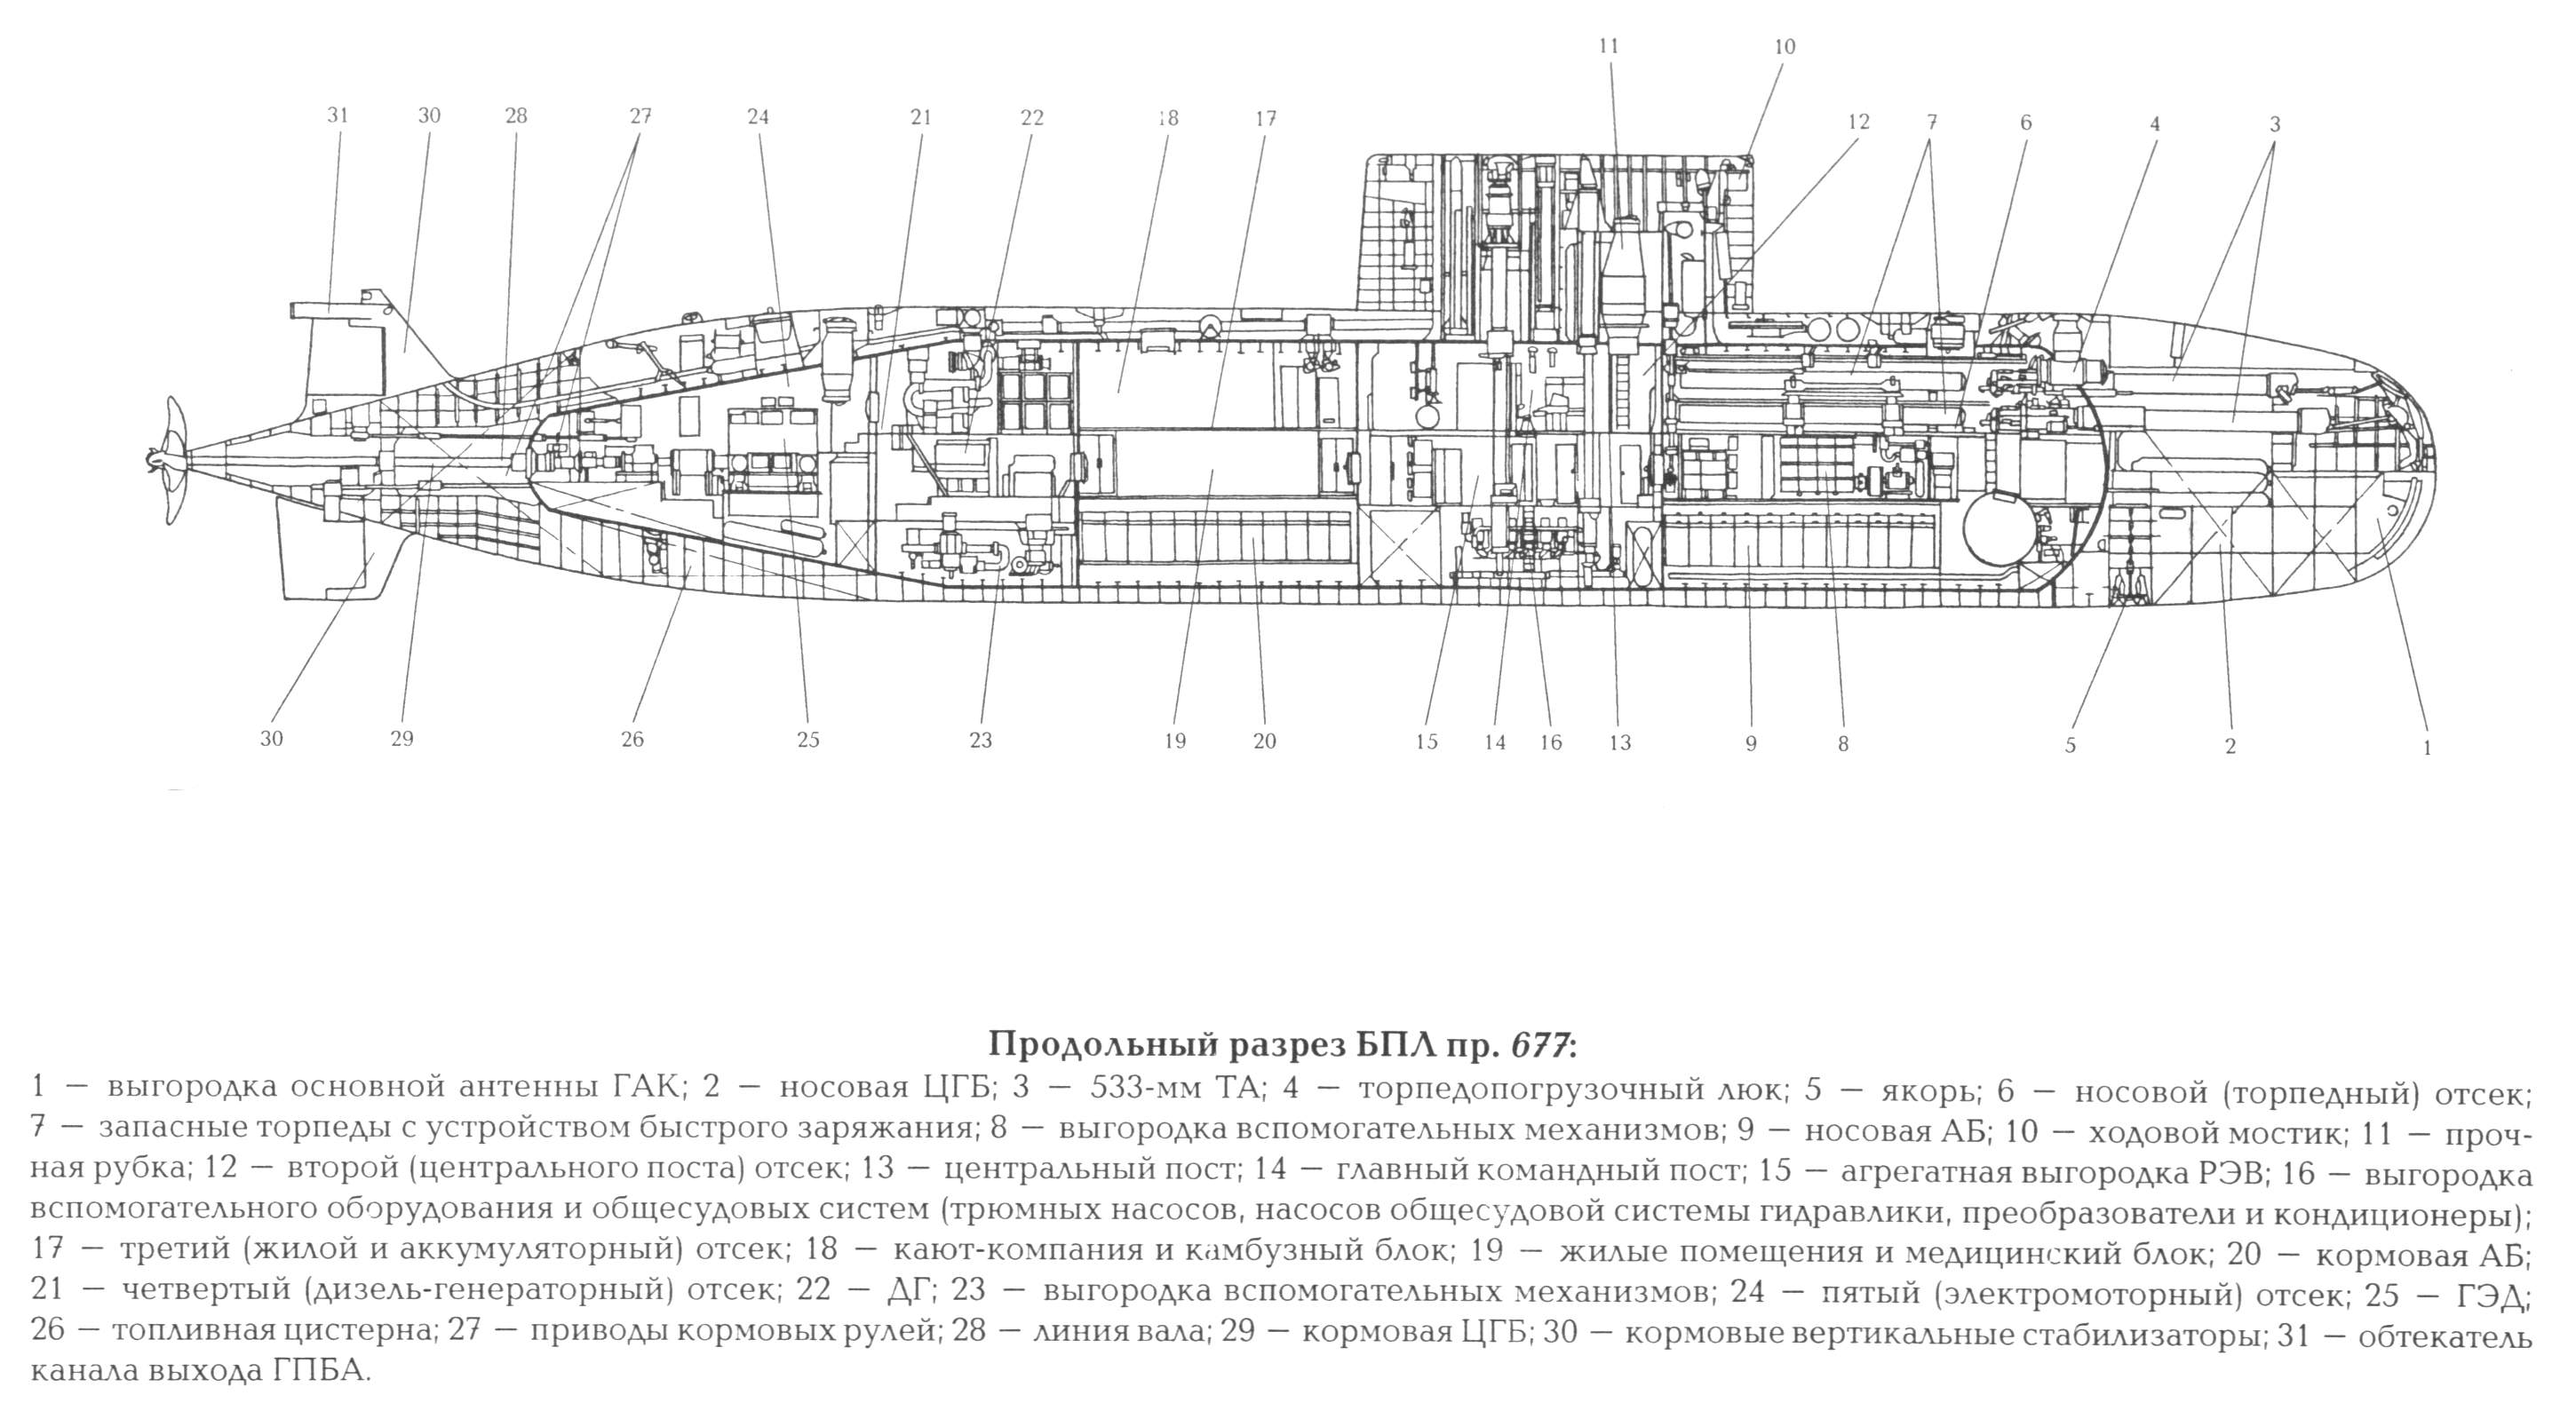 Project 677: Lada/Amur(export) class Submarine - Page 14 12-6761333-pr.677-skhema-apalkov.t.1.ch.2-